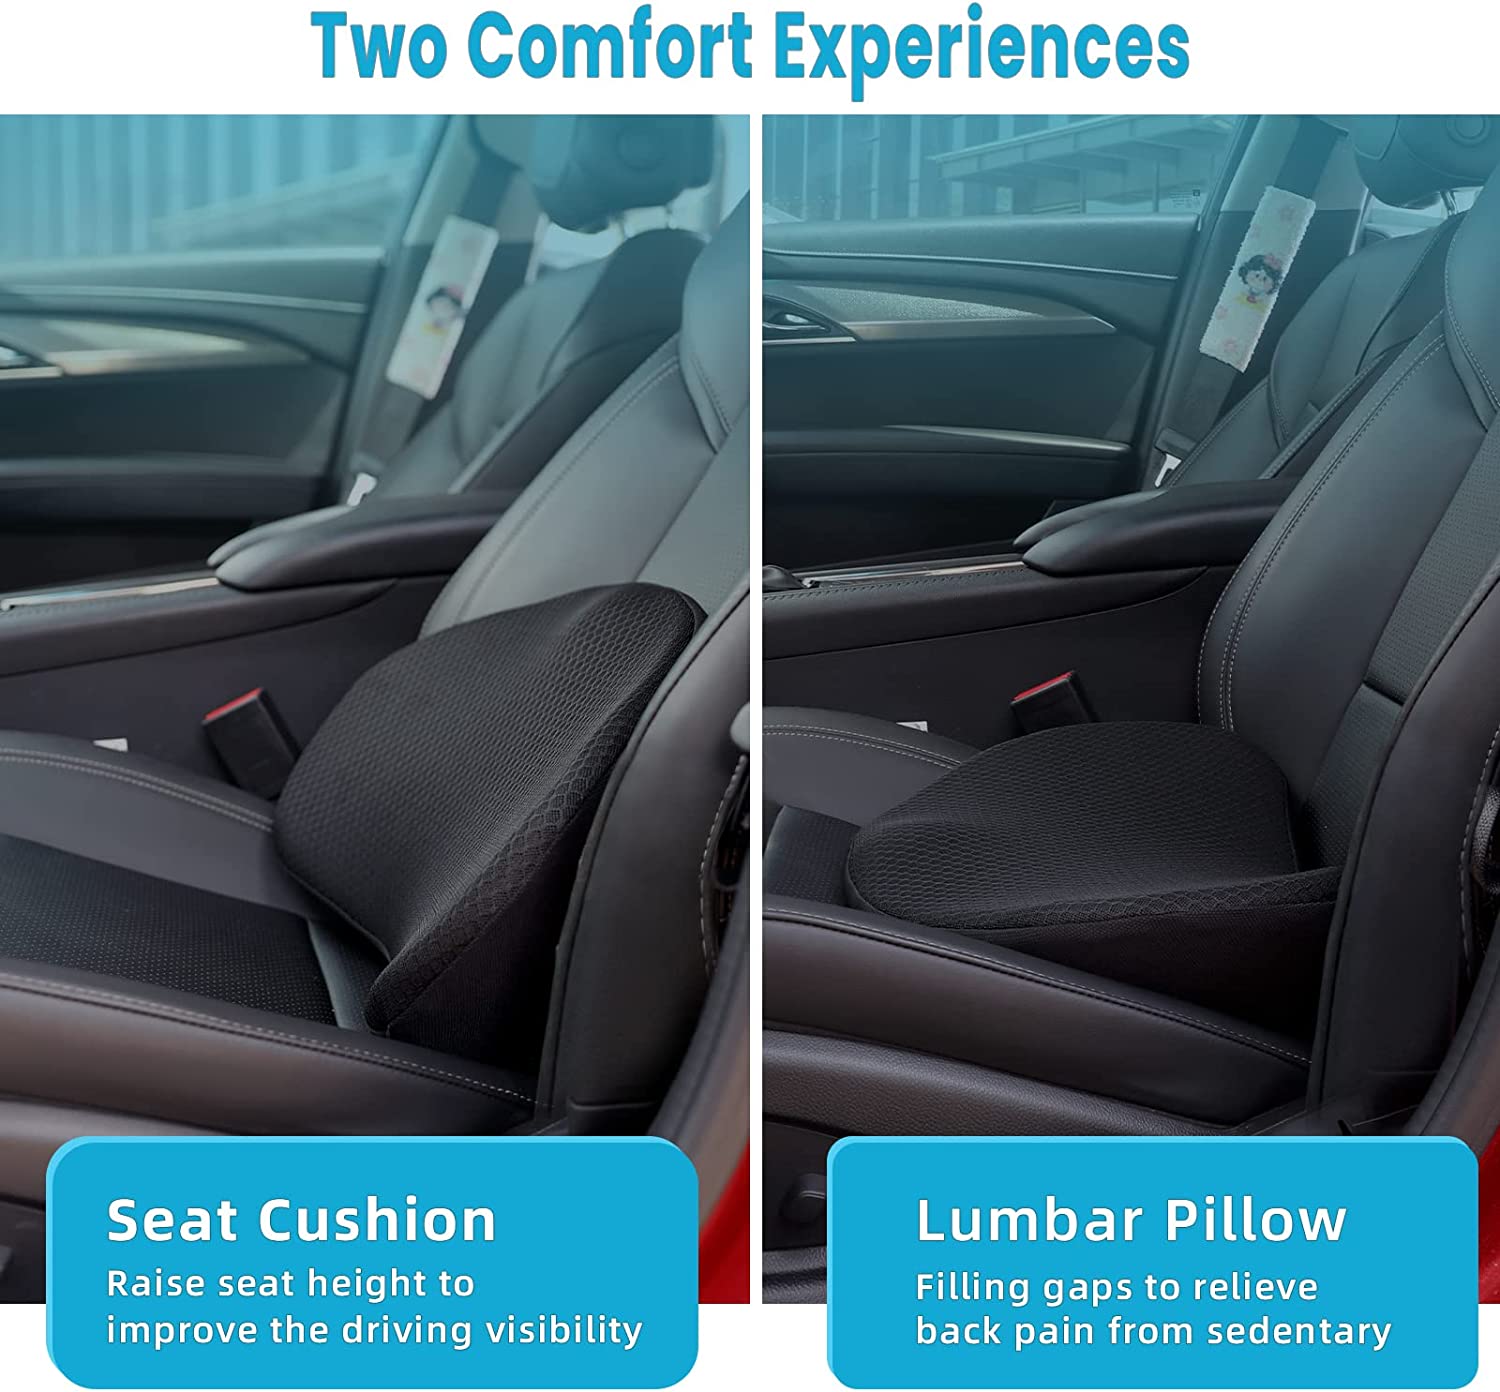 Cowaudio Pad™ Car Seat Cushion for Shorter Drivers - 71nV2sHvp7L. AC SL1500 7e308984 6670 48ef 8d7c 5799d4e3dbb1